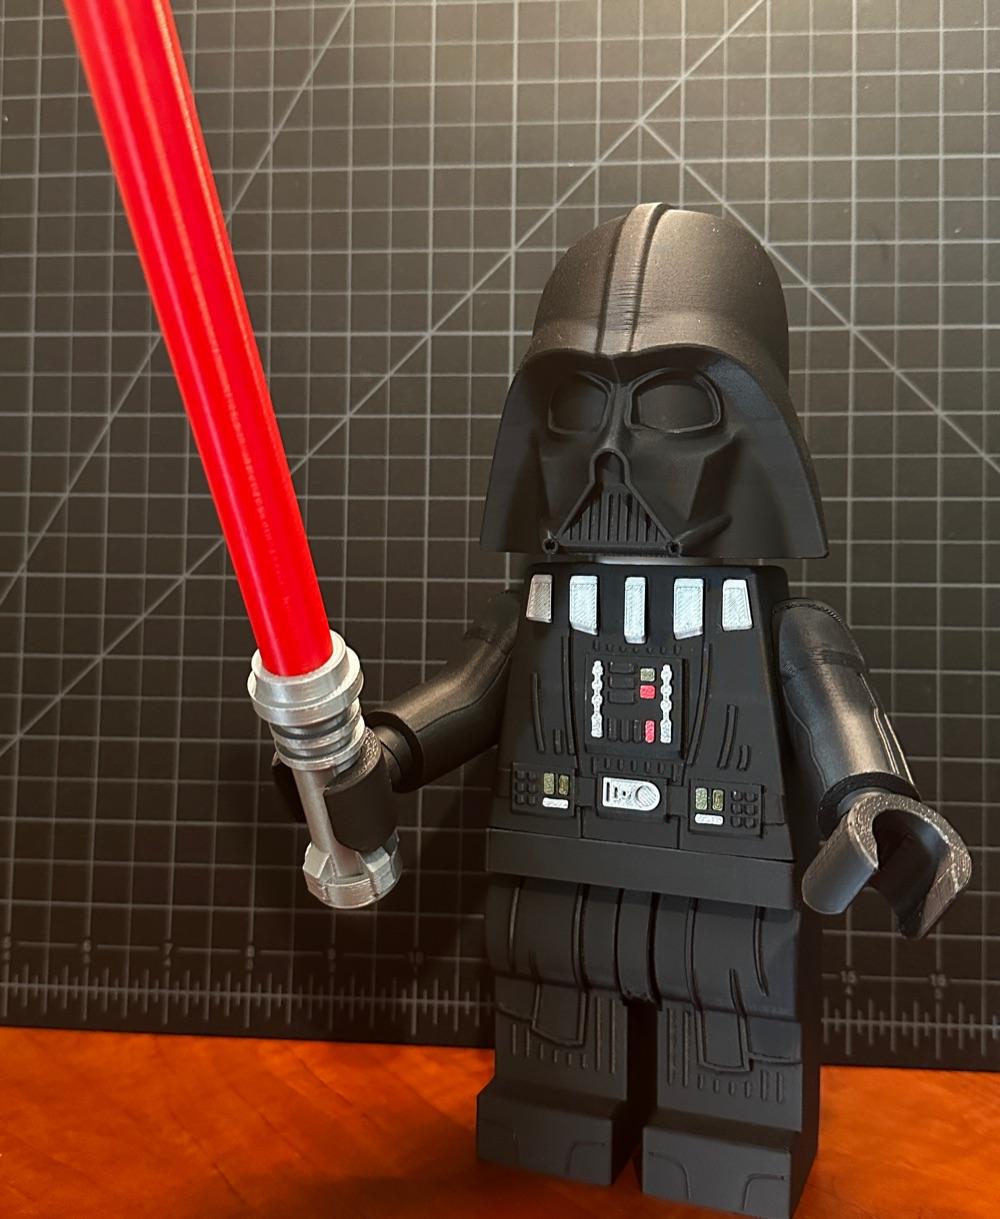 Darth Vader (6:1 LEGO-inspired brick figure, NO MMU/AMS, NO supports, NO glue) - Black: BBL PLA MATTE
Silver: BBL PLA BASIC
Chest Inserts: BBL PLA MATTE (Red & Army Green)
Saber: BBL PLA BASIC (Silver) & BBL PETG BASIC (Red) - 3d model